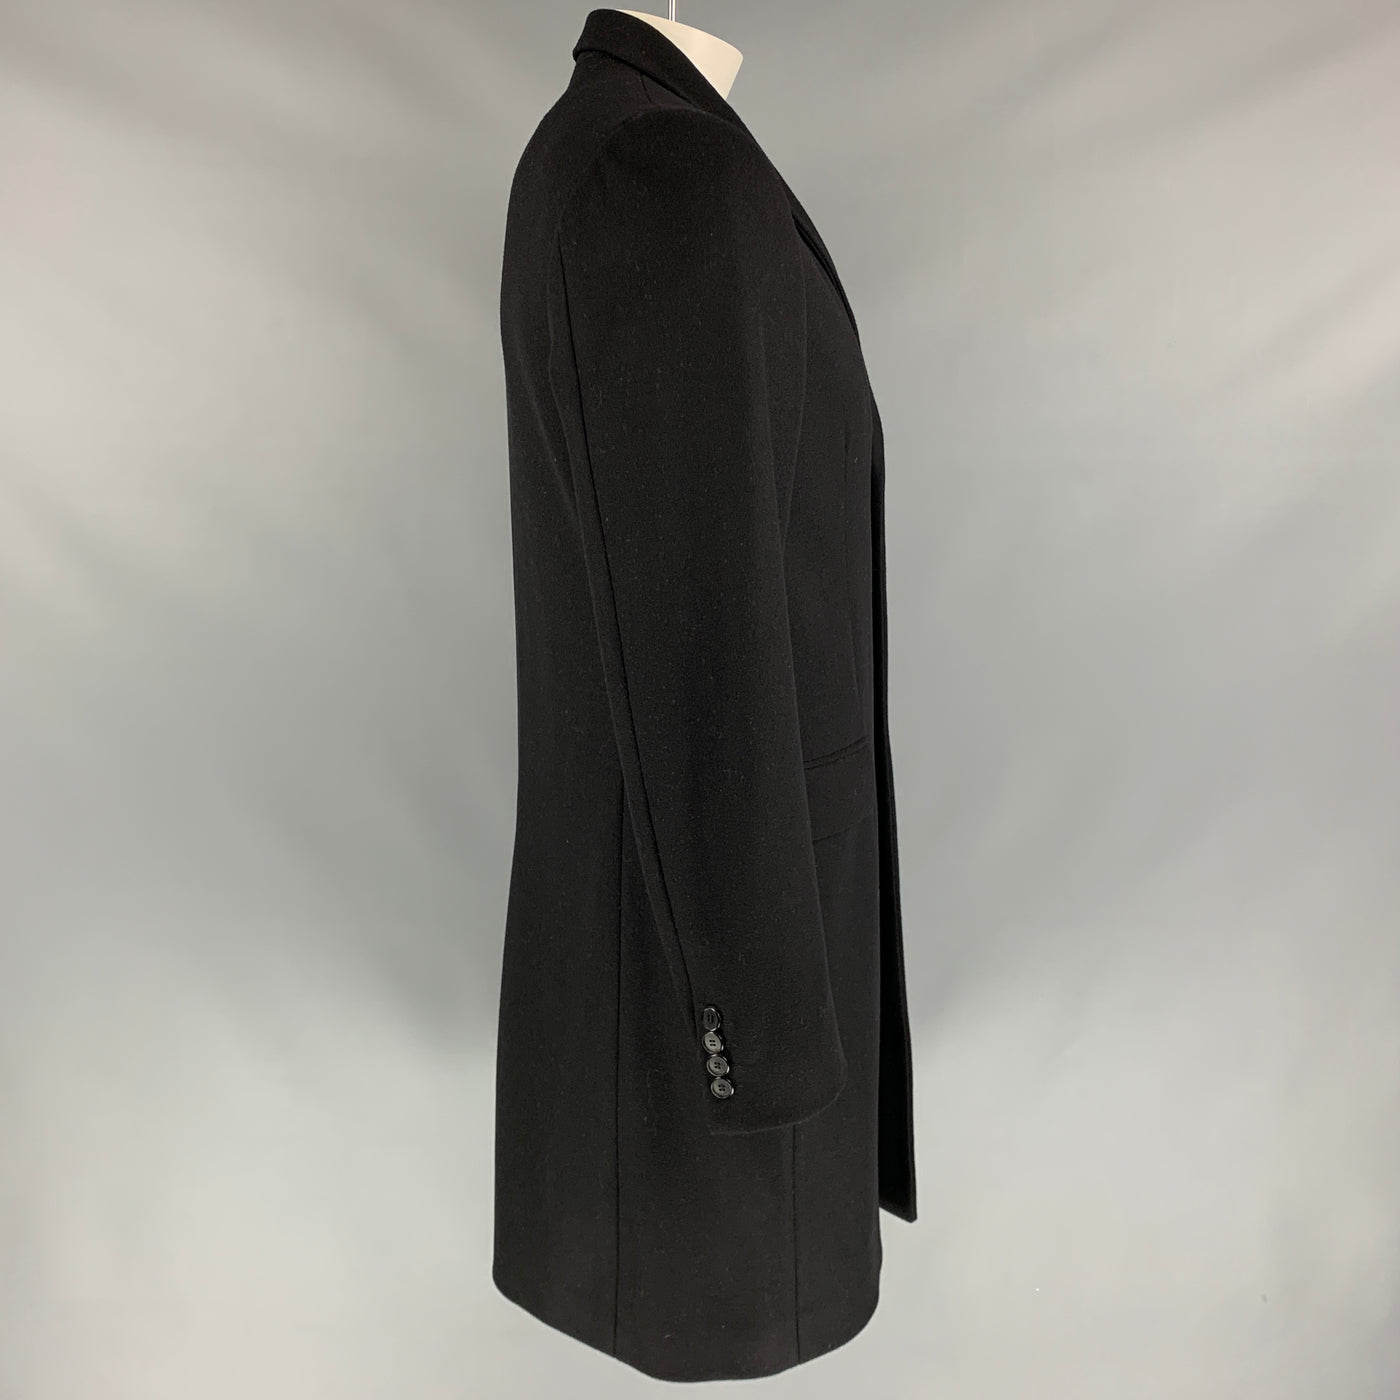 GIVENCHY Size 42 Black Wool Blend Notch Lapel Coat